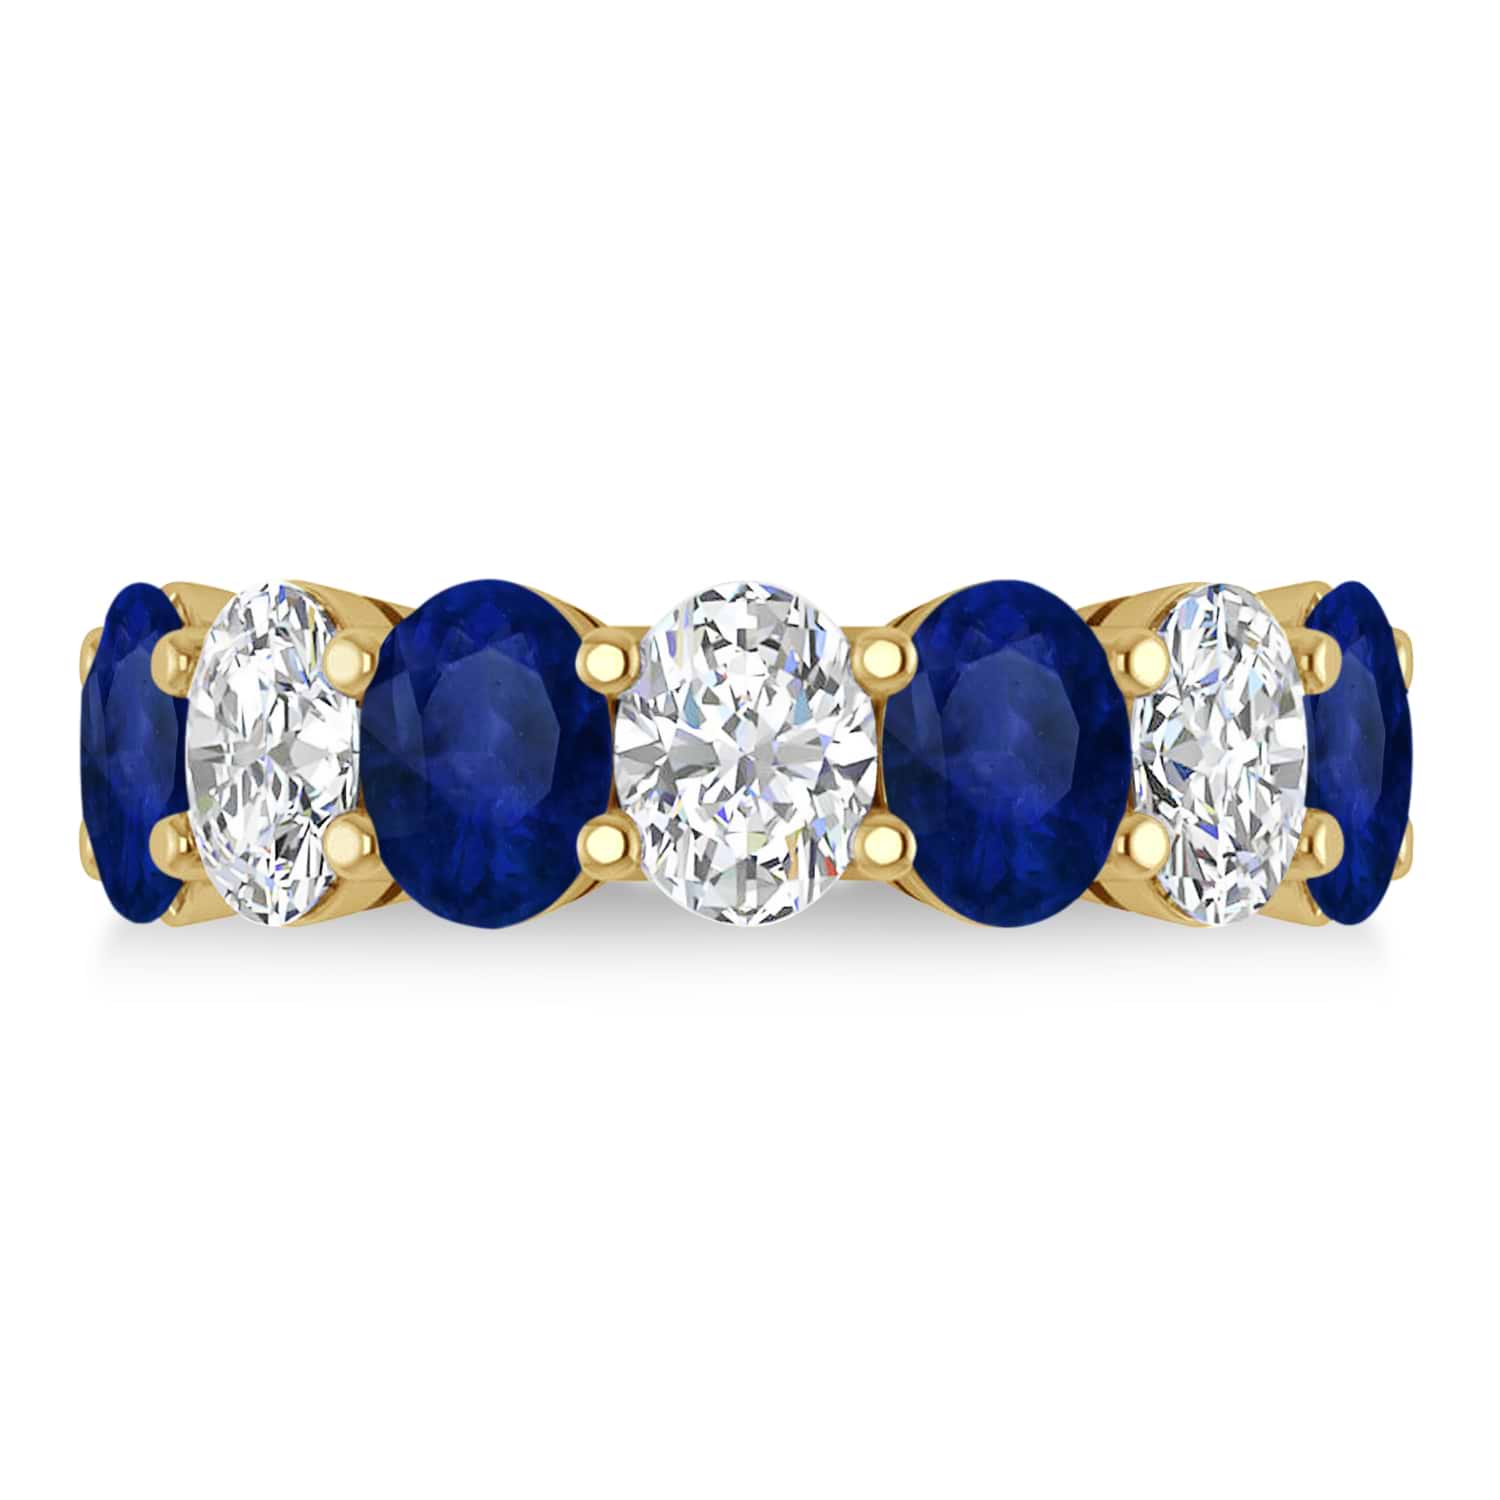 Oval Diamond & Blue Sapphire Seven Stone Ring 14k Yellow Gold (7.00ct)